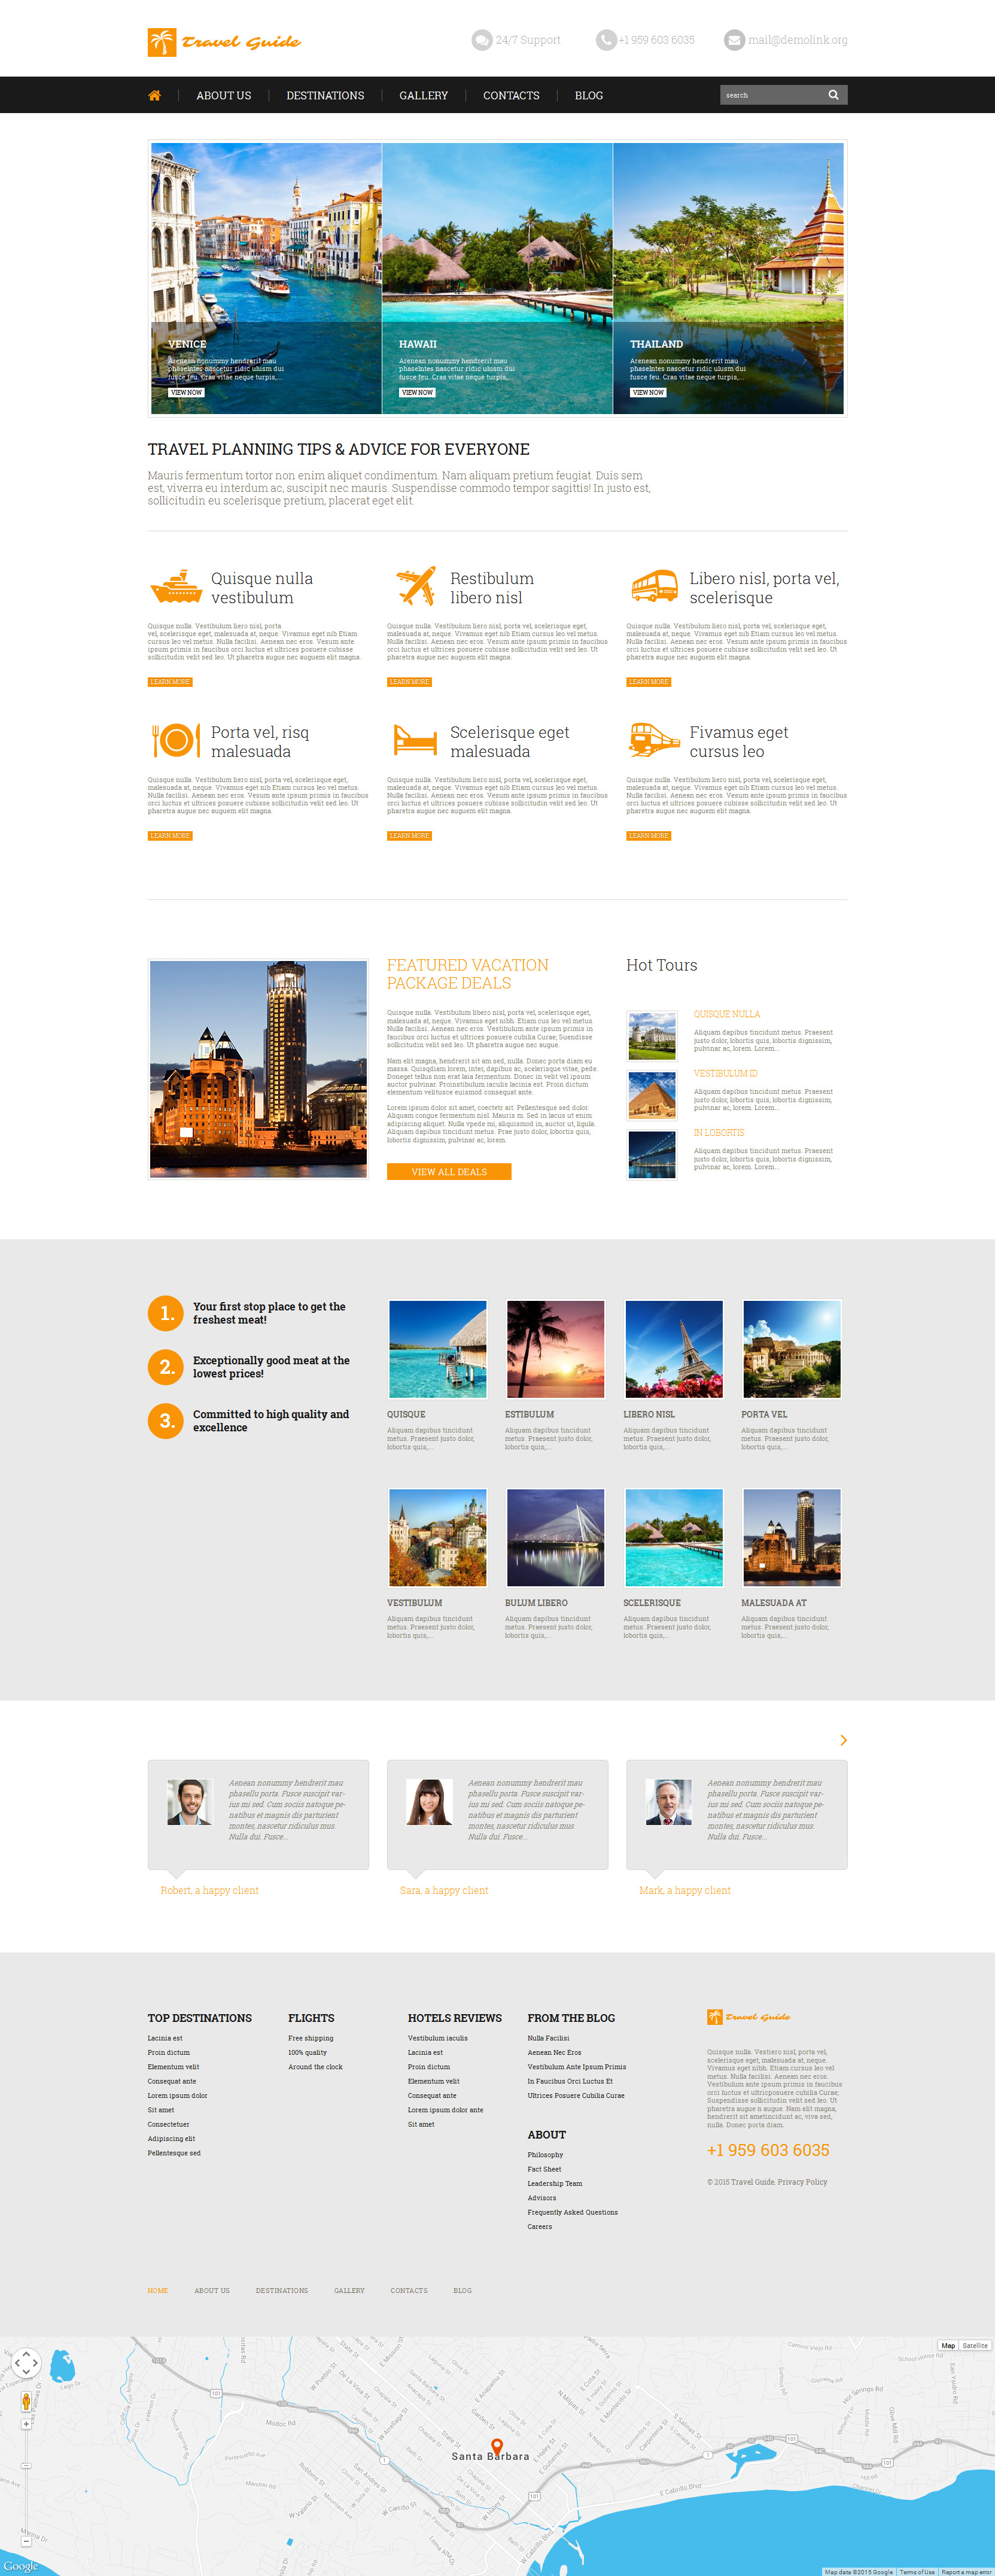 Travel Guide WordPress Theme